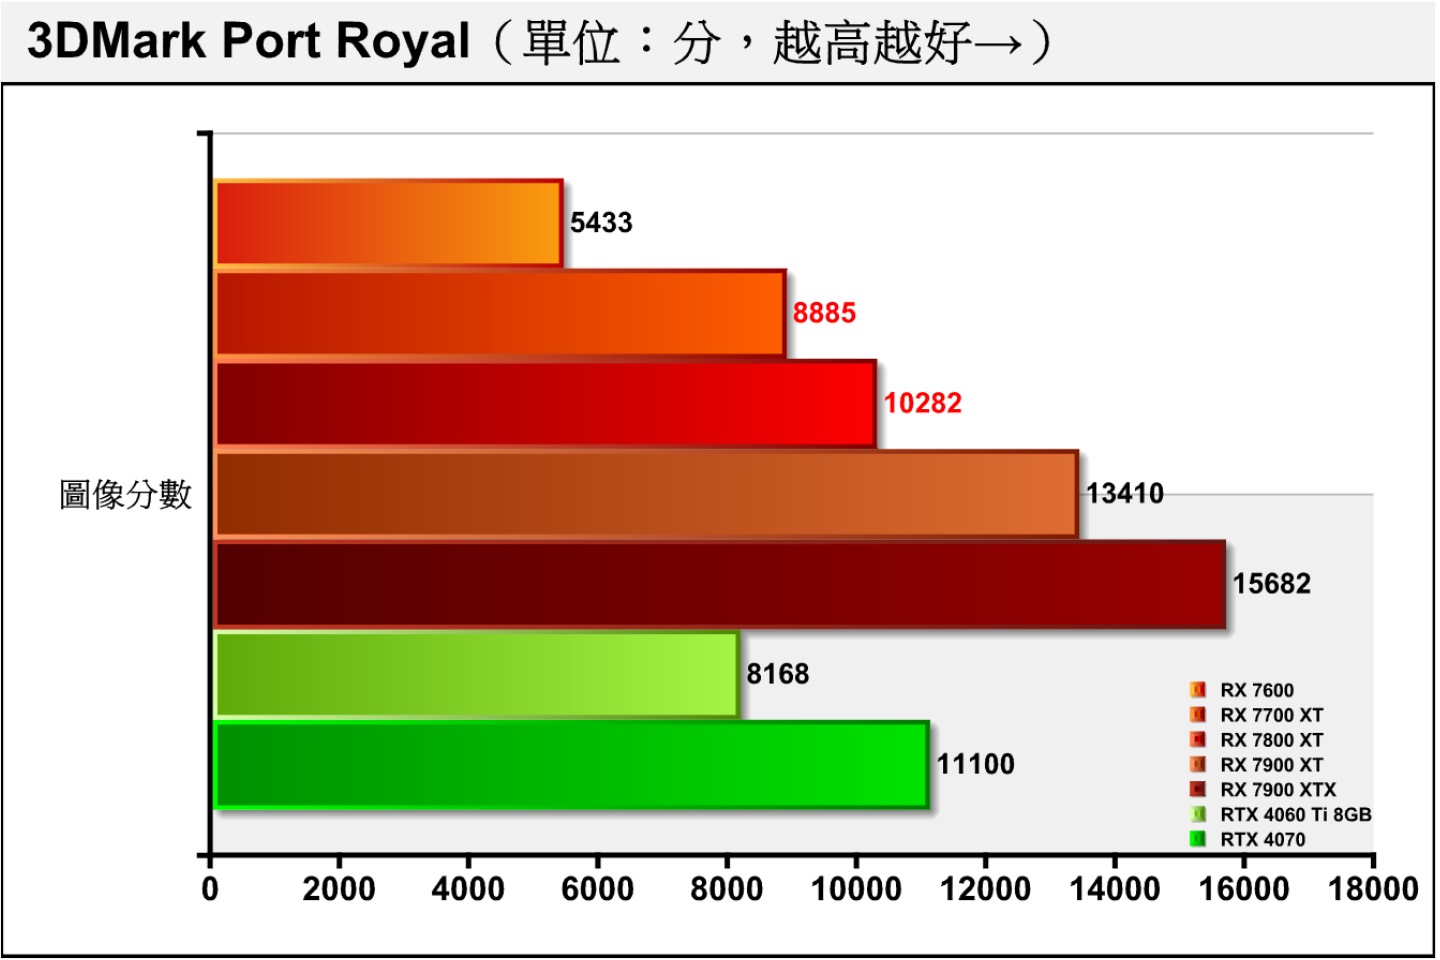 3DMark Port Royal採用DirectX Raytracing（DXR）光線追蹤繪圖技術配2K解析度，是考驗顯示卡光線追蹤效能的競技場。RX 7800 XT效能落後RTX 4070達7.37%，雖然RX 7700 XT領先RTX 4060 Ti 8GB幅度為8.78%，但是因為其價格較高，所以性價比不如後者。